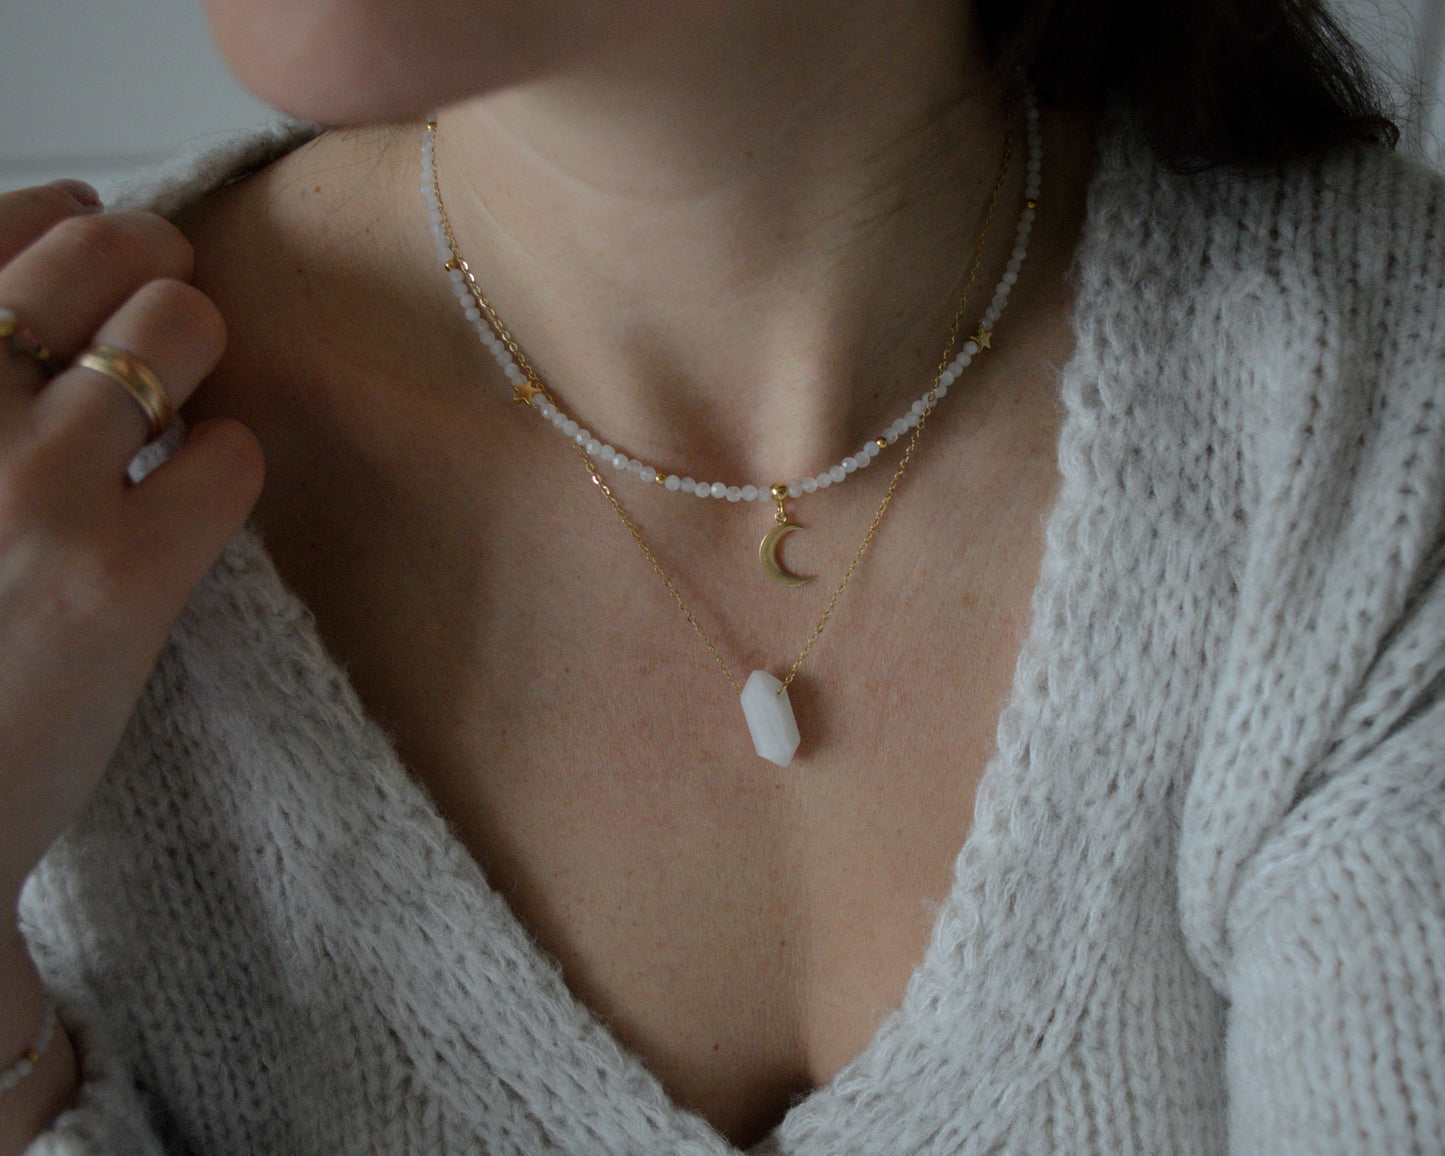 Moonstone choker necklace